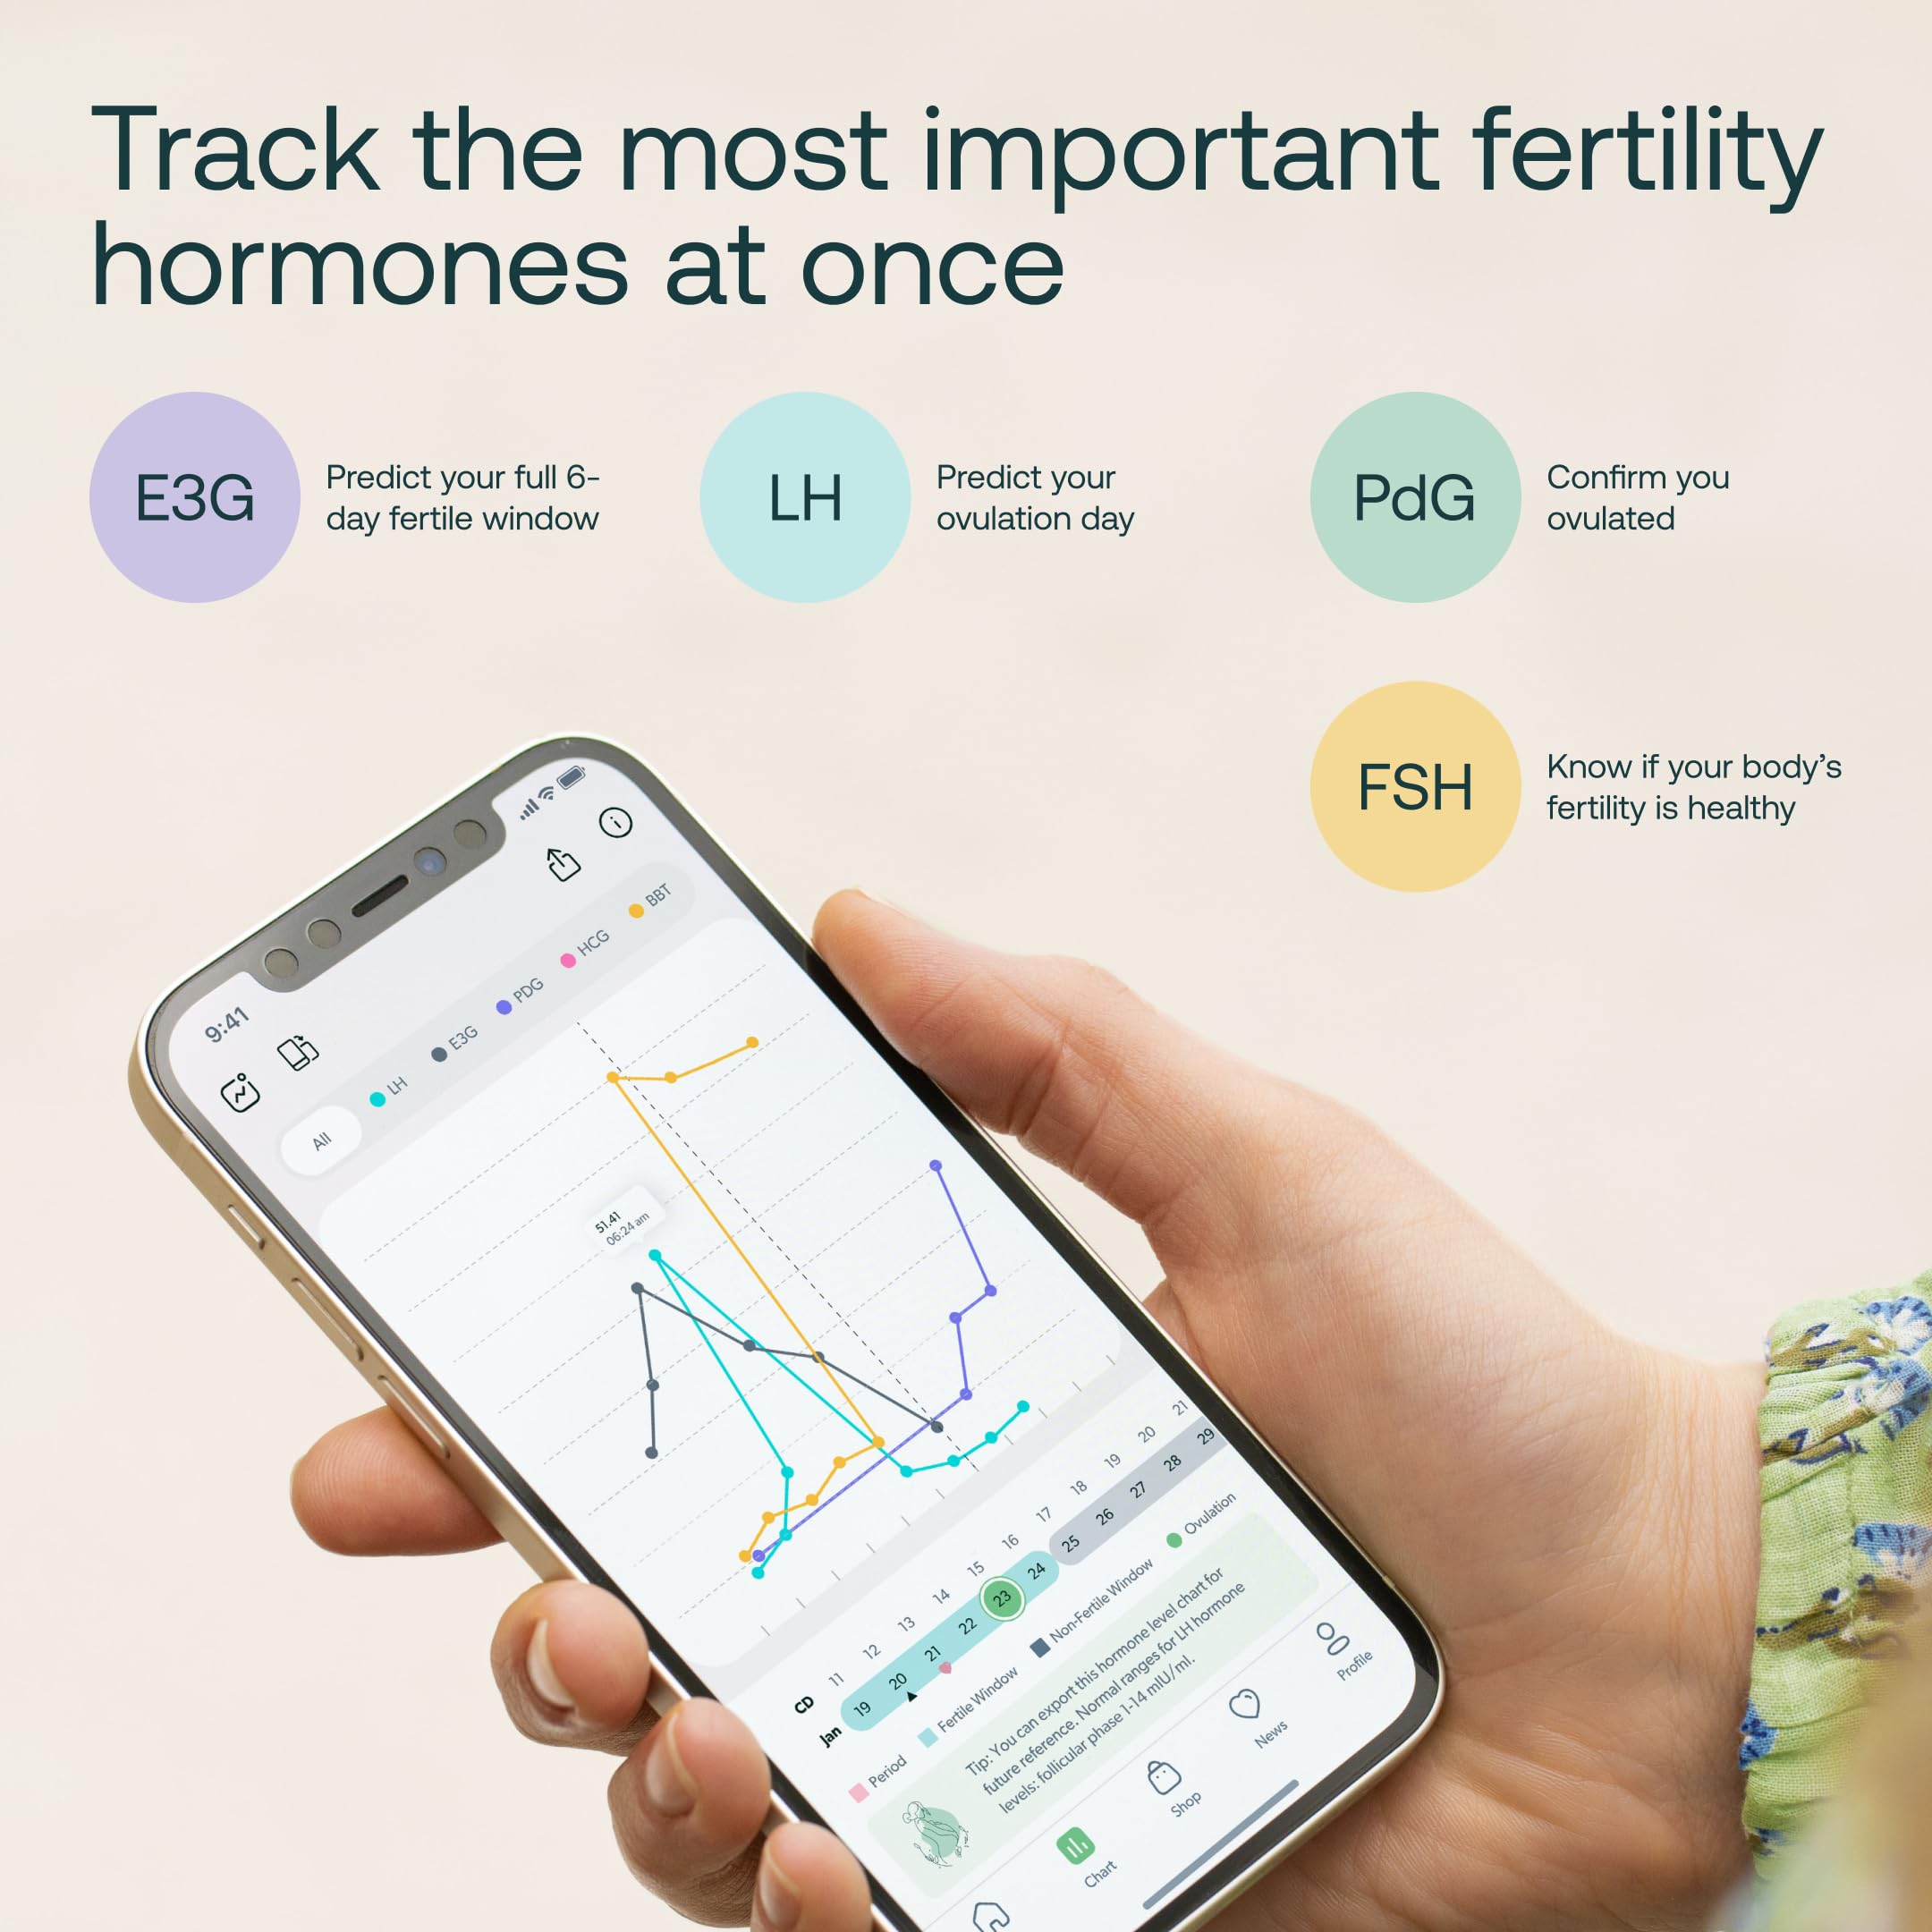 Mira Clarity Bundle, Mira Analyzer, 10 Max Wands, and 20 Ovum Wands, Track 4 Fertility Hormones, Predict & Confirm Ovulation and Fertility Window